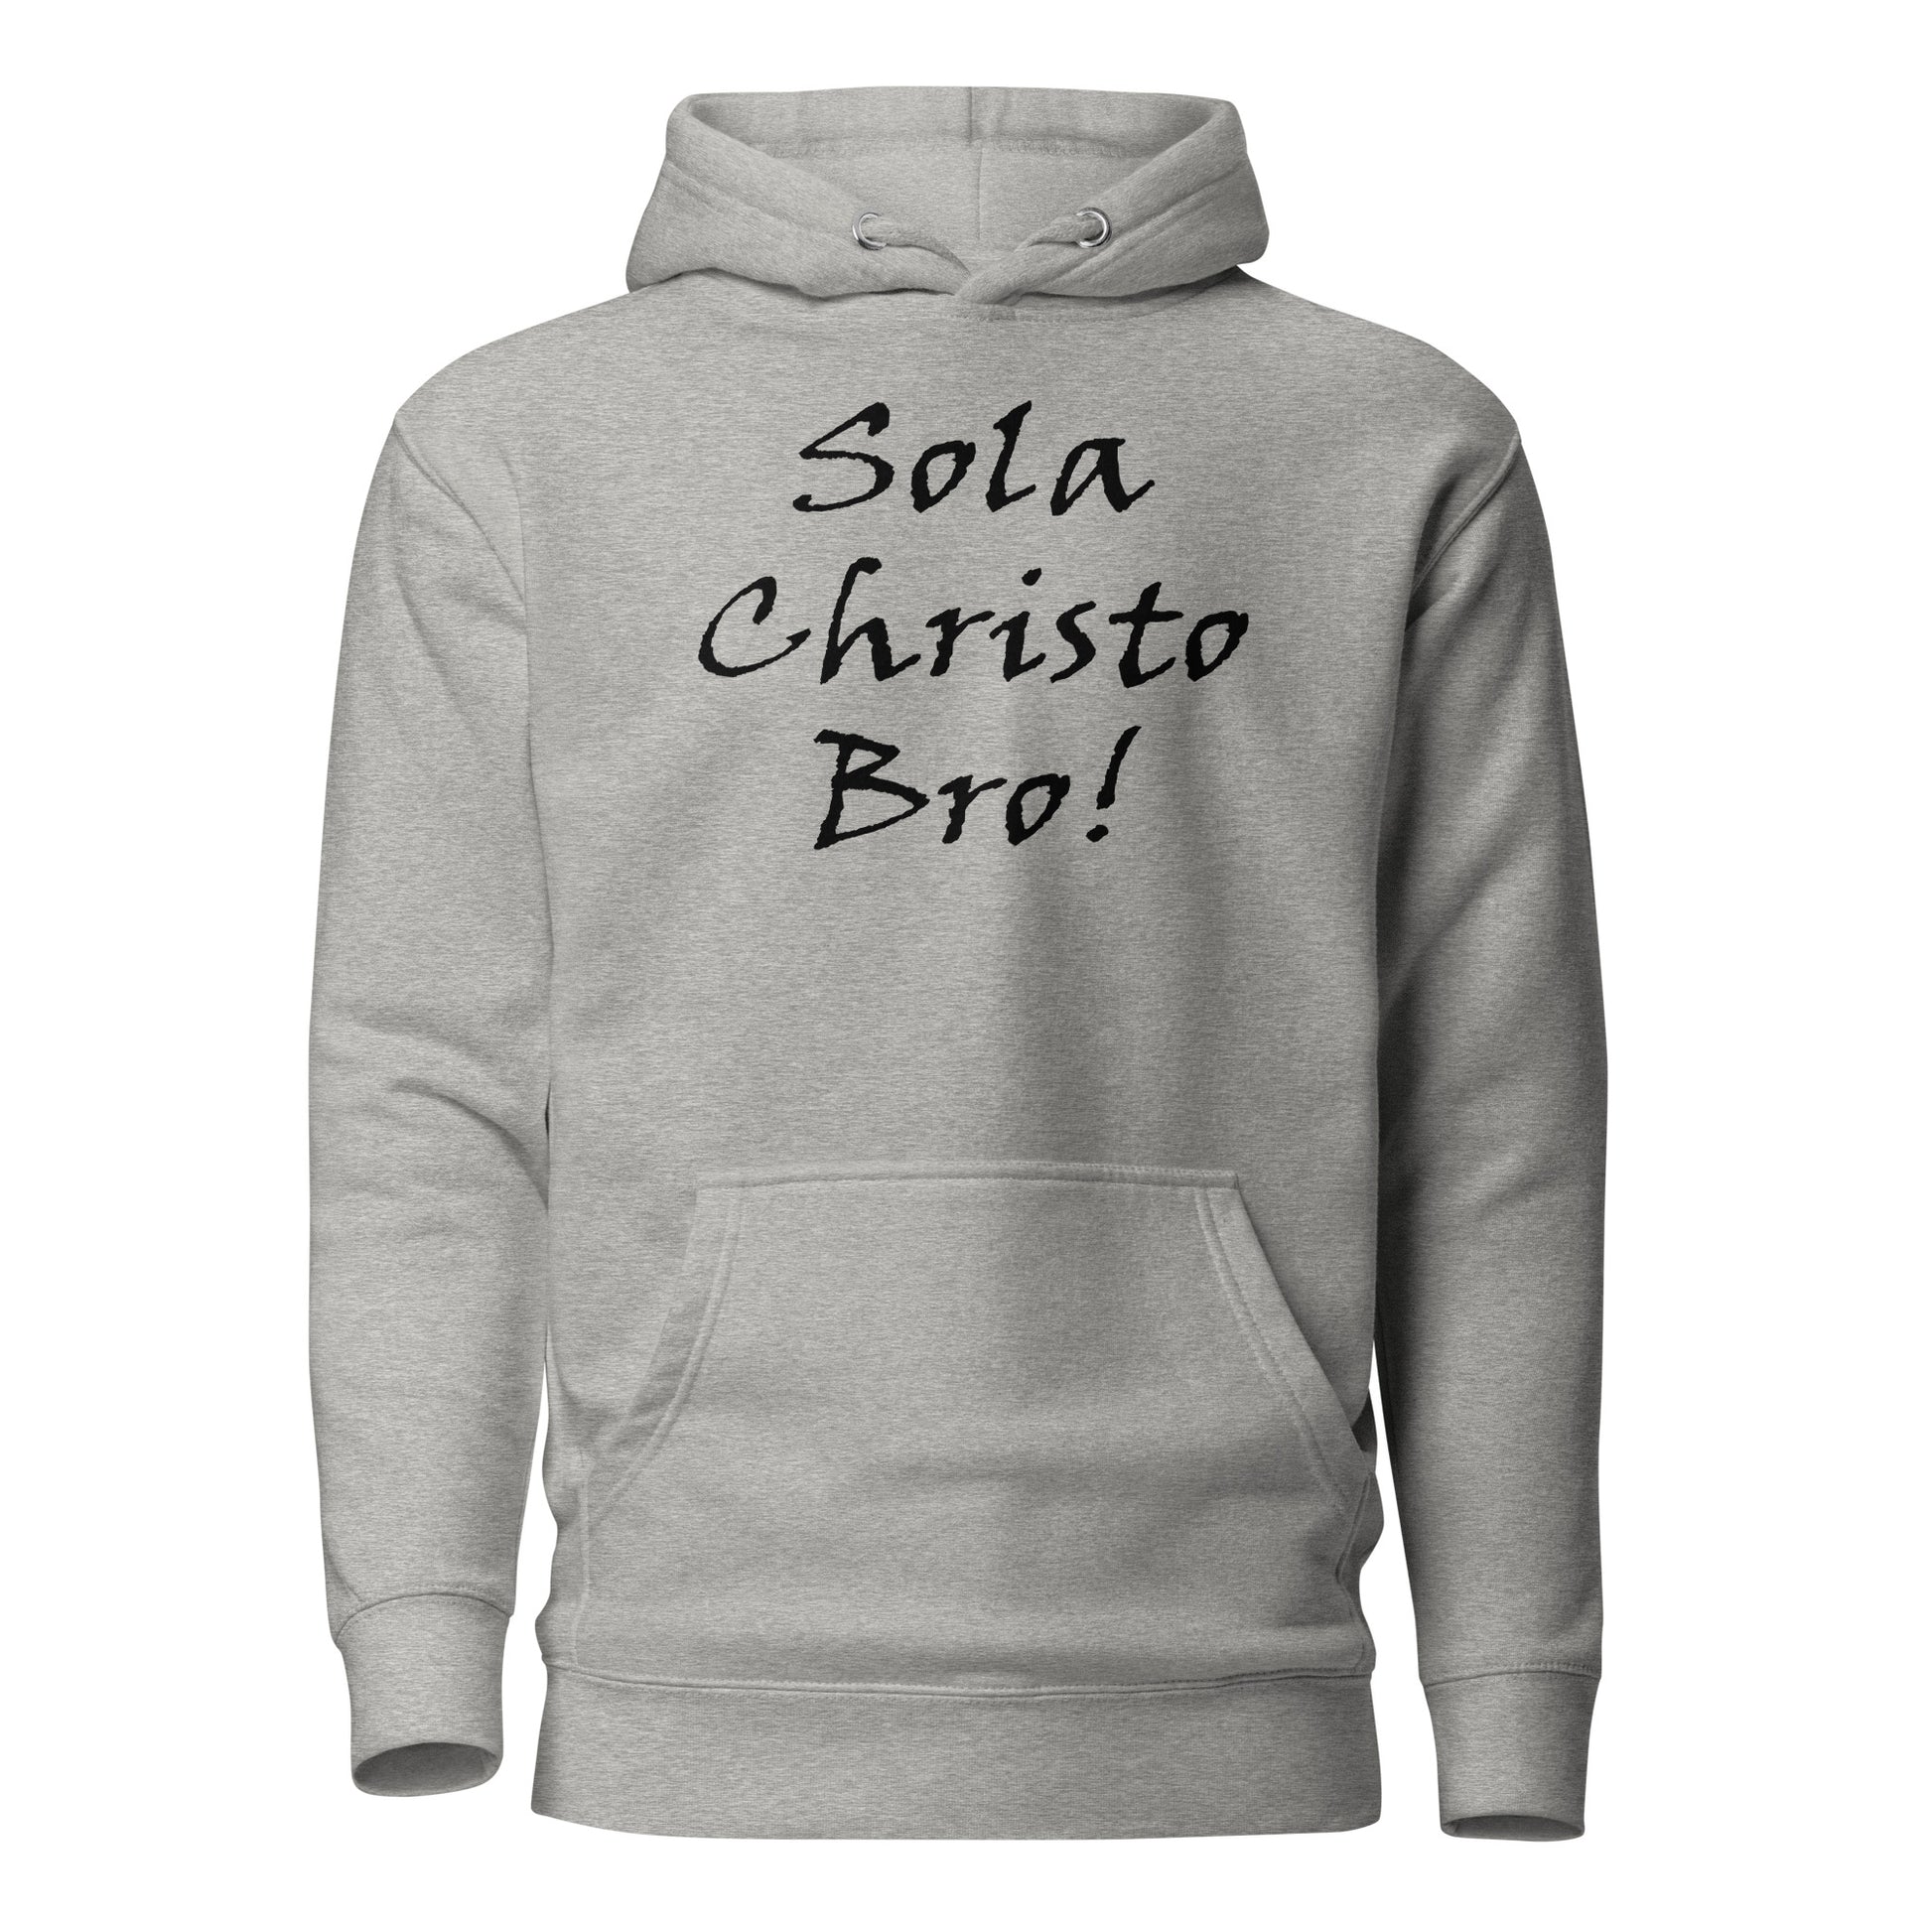 Sola Christo Bro! Unisex Hoodie - Solid Rock Designs | Christian Apparel